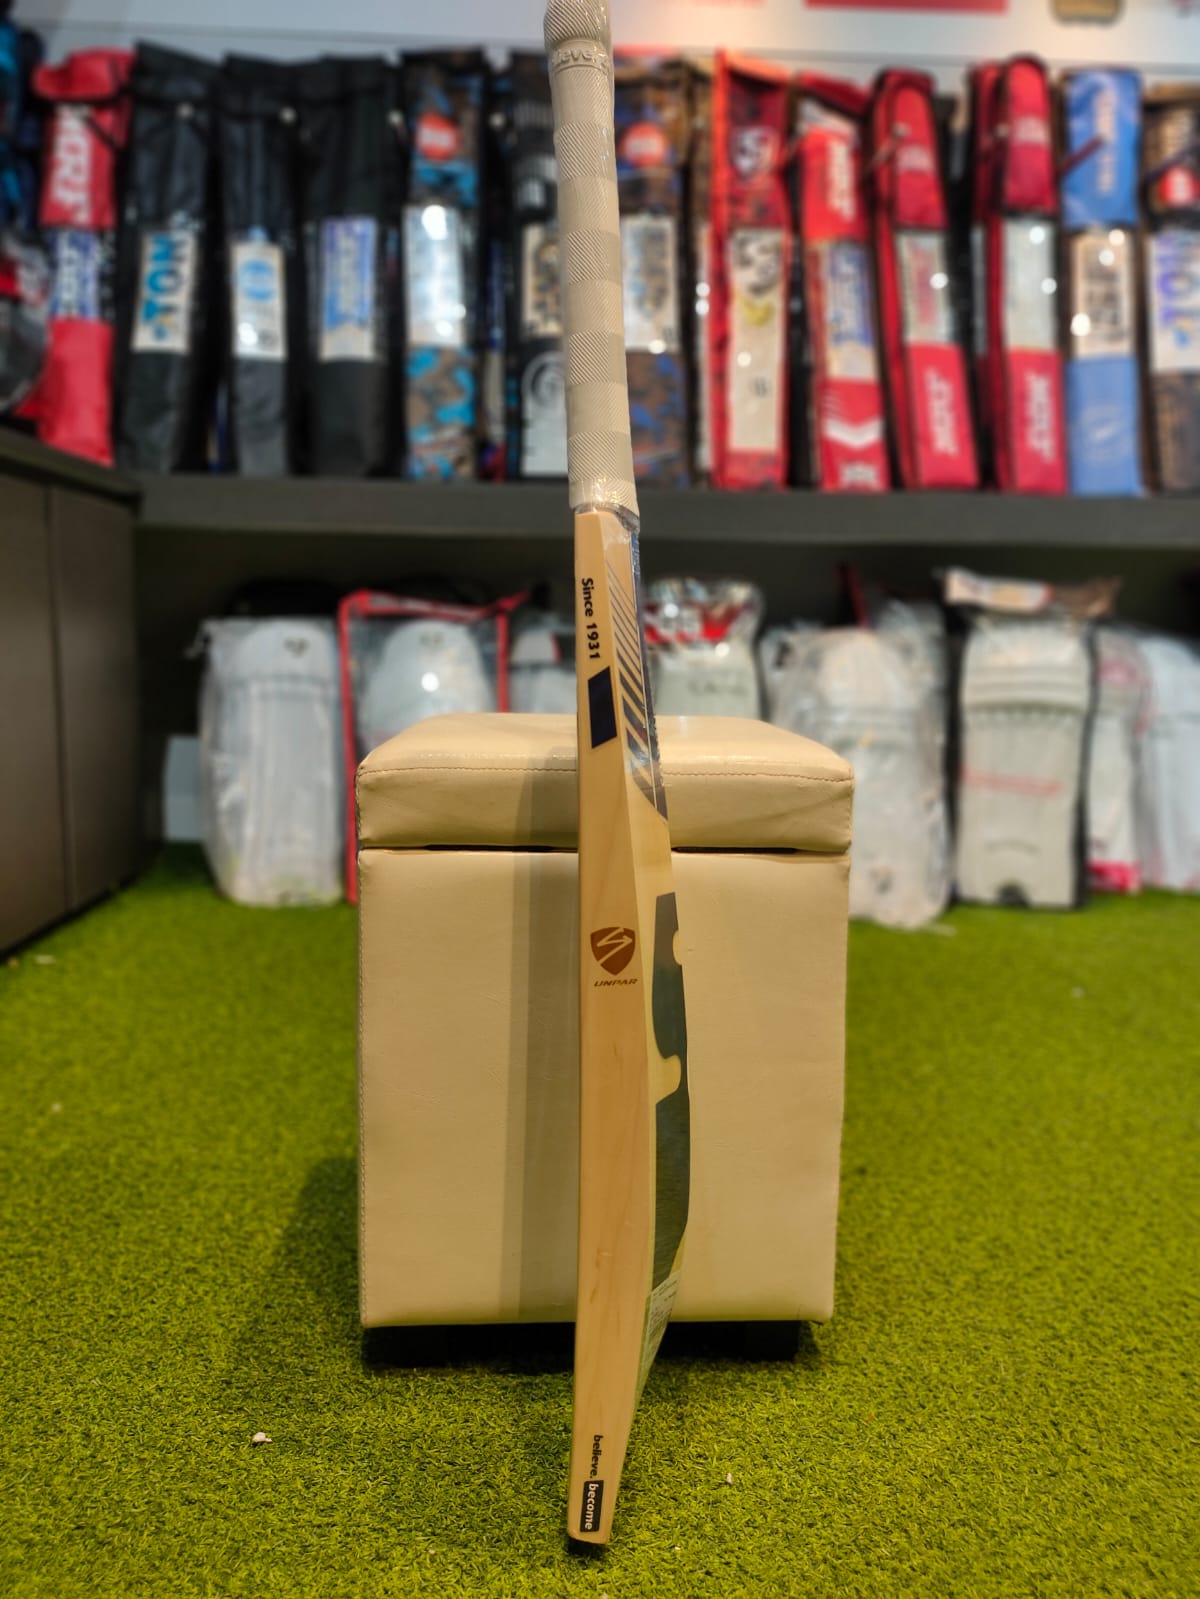 Cricket Bat - SG-TRIPLE CROWN CLASSIC